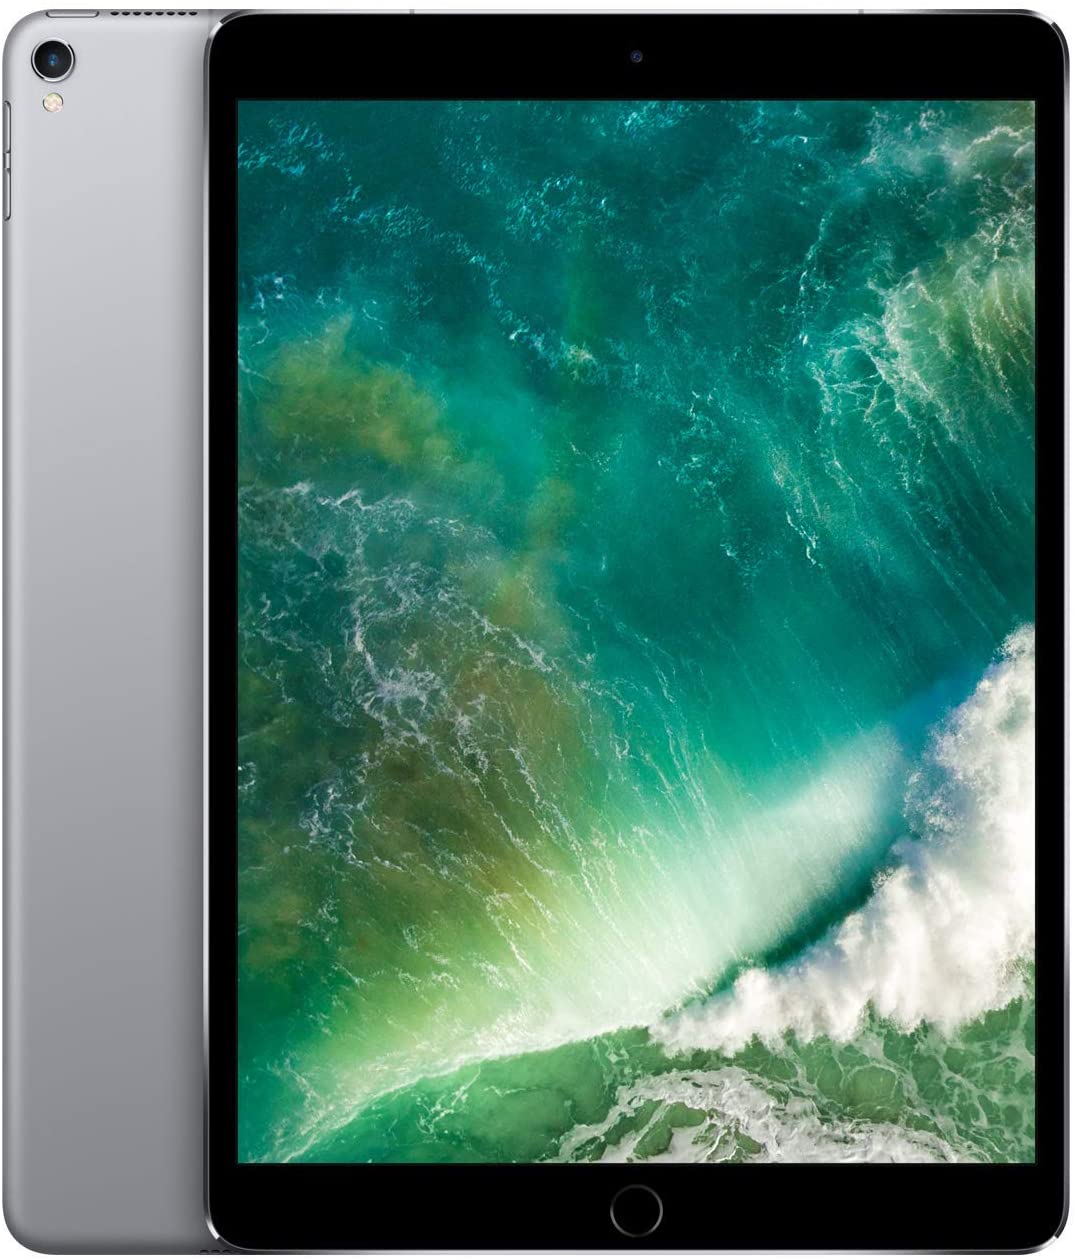 Apple iPad Pro 2nd Gen (2017) 10.5in 64GB Wifi + Cellular (Unlocked) - Space Gray (Refurbished)